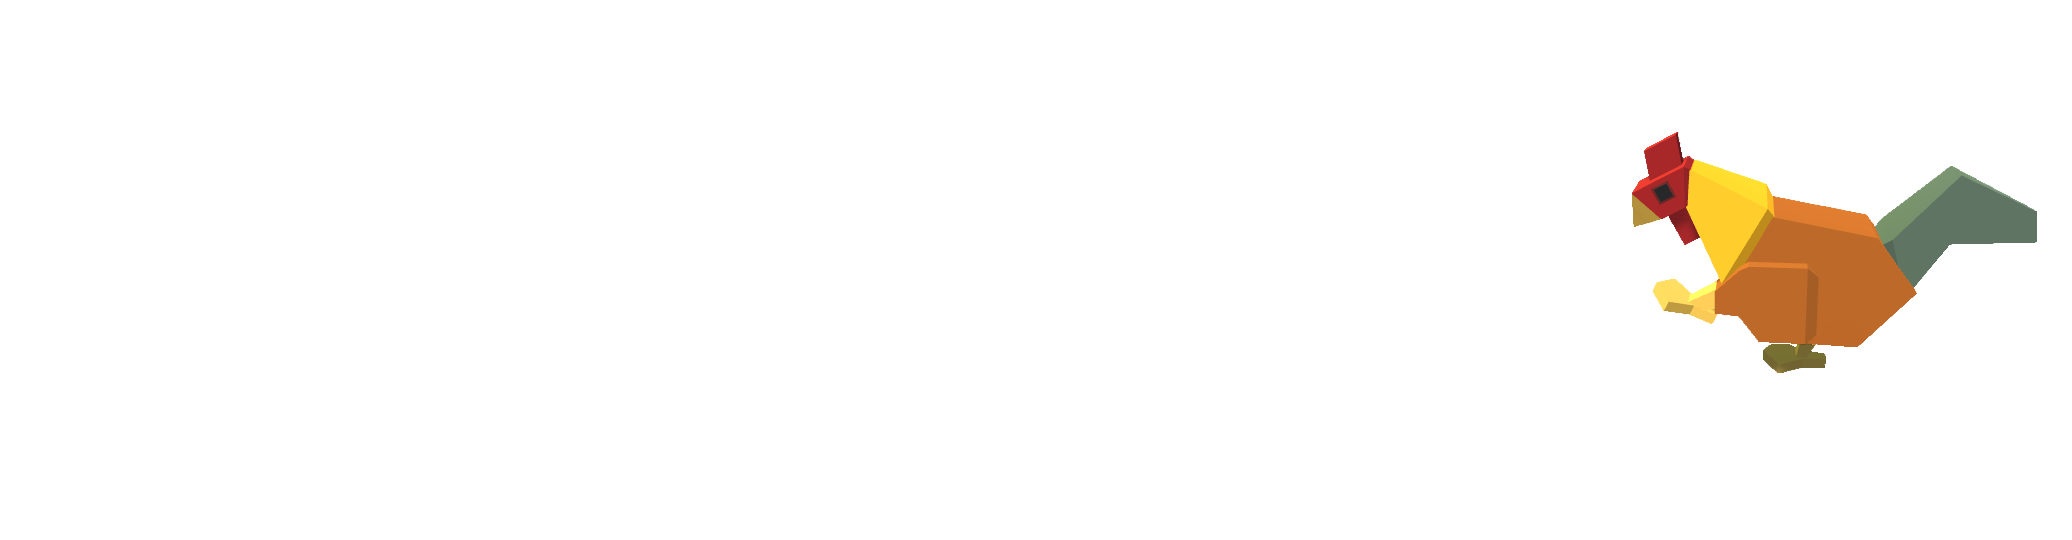 Cockadoodleduel